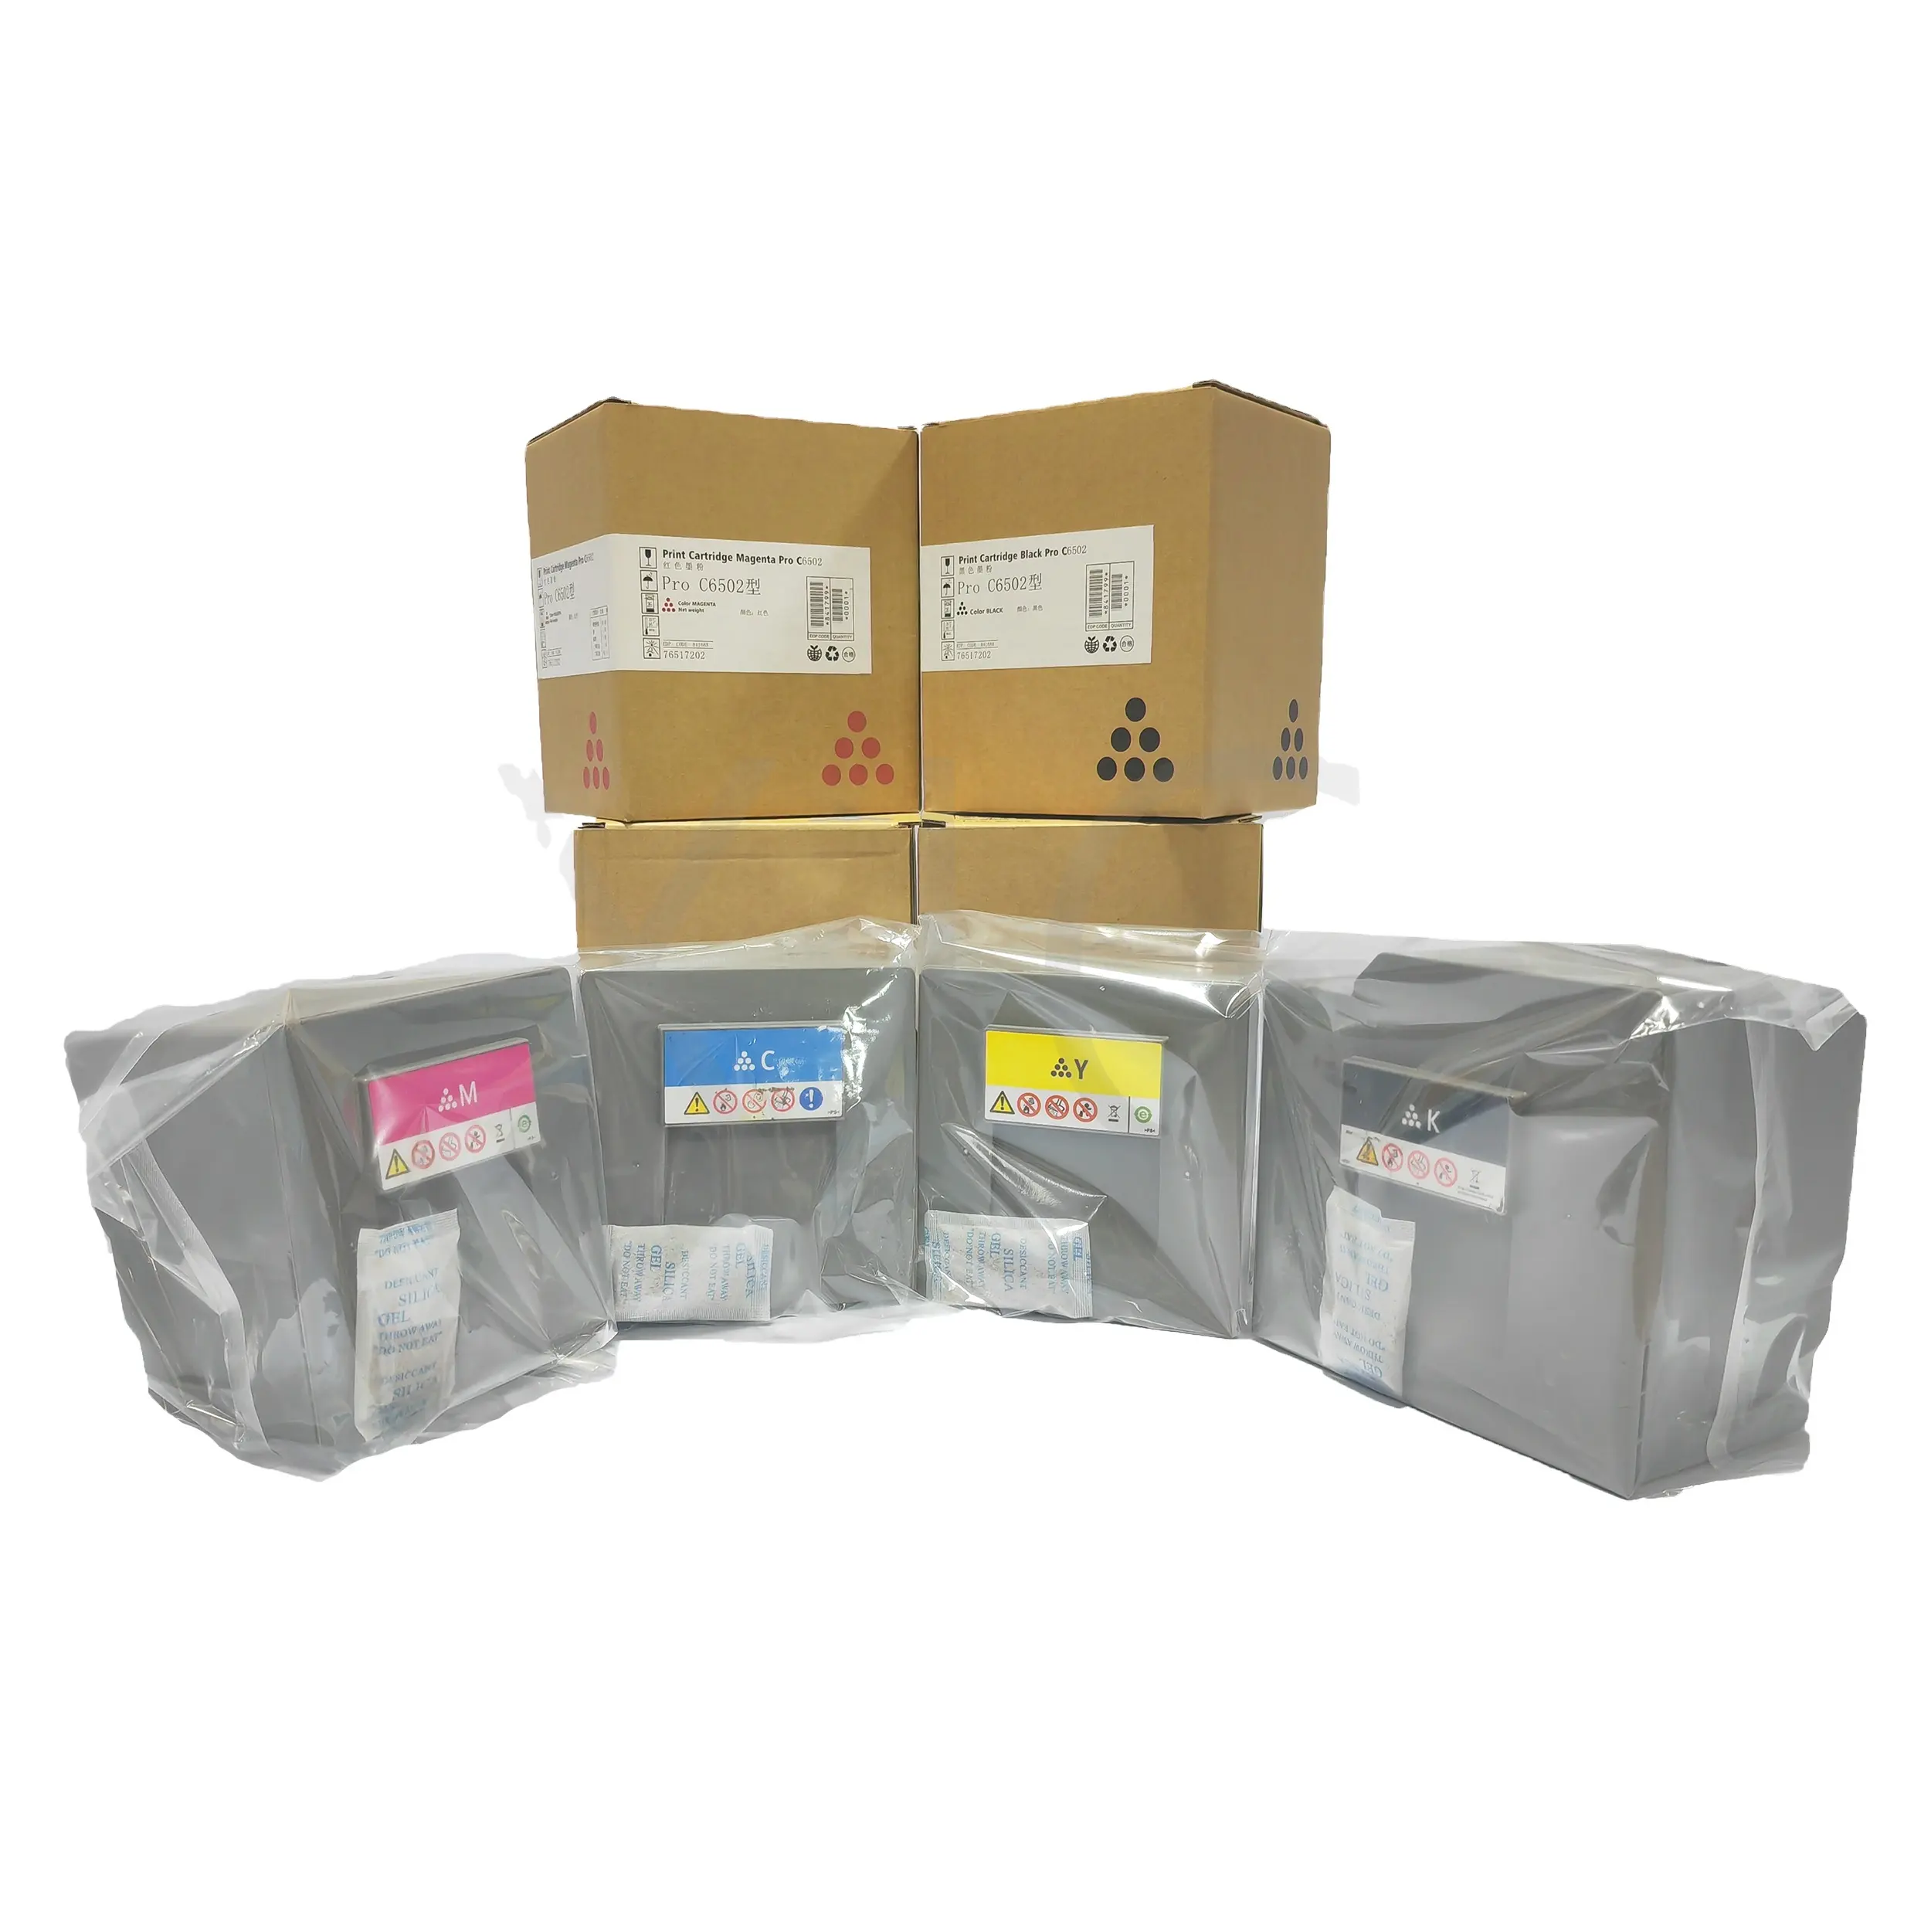 Original packaging powder for Ricoh mp 8002 Copier Toner Cartridge MPC 8002 Compatible for Ricoh MPC6502 MPC8002 Toner Cartridge